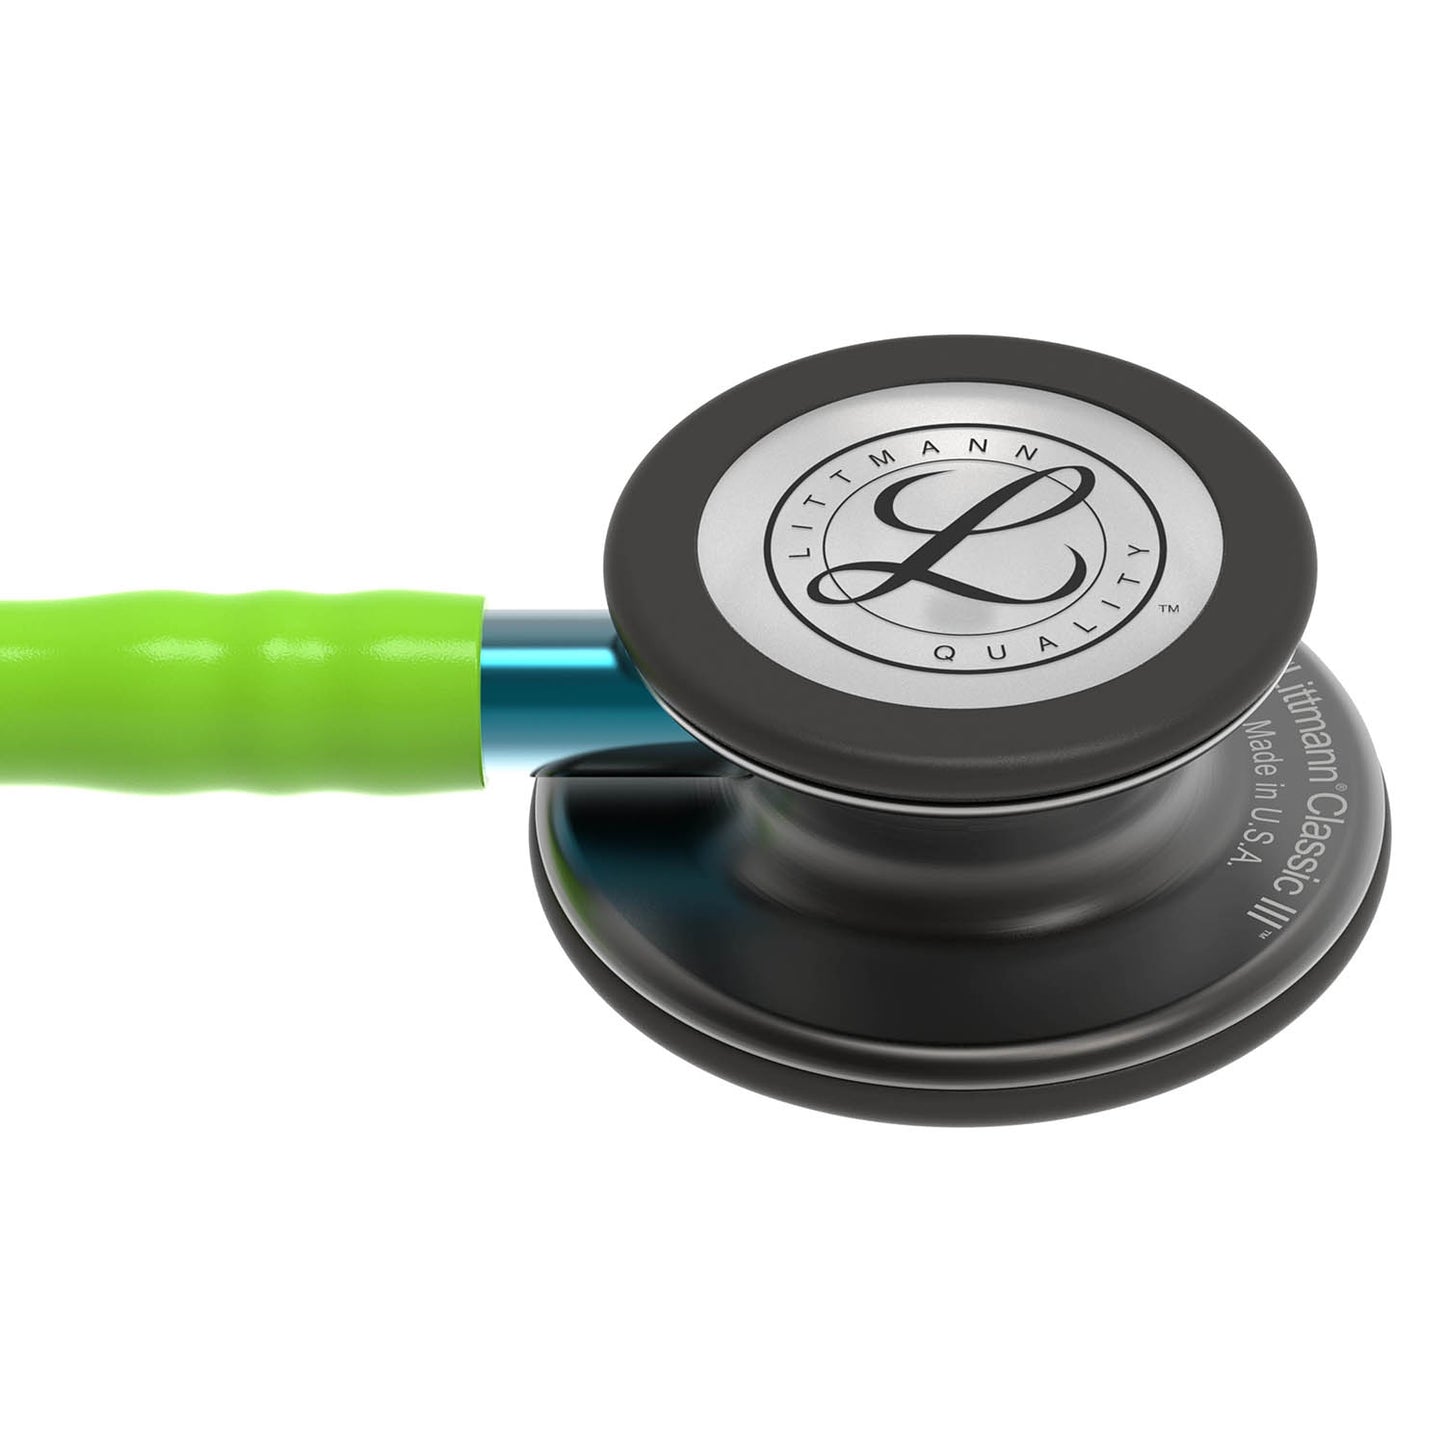 Littmann Classic III Monitoring Stethoscope: Smoke & Lime Green - Blue Stem 5875 Stethoscopes 3M Littmann   